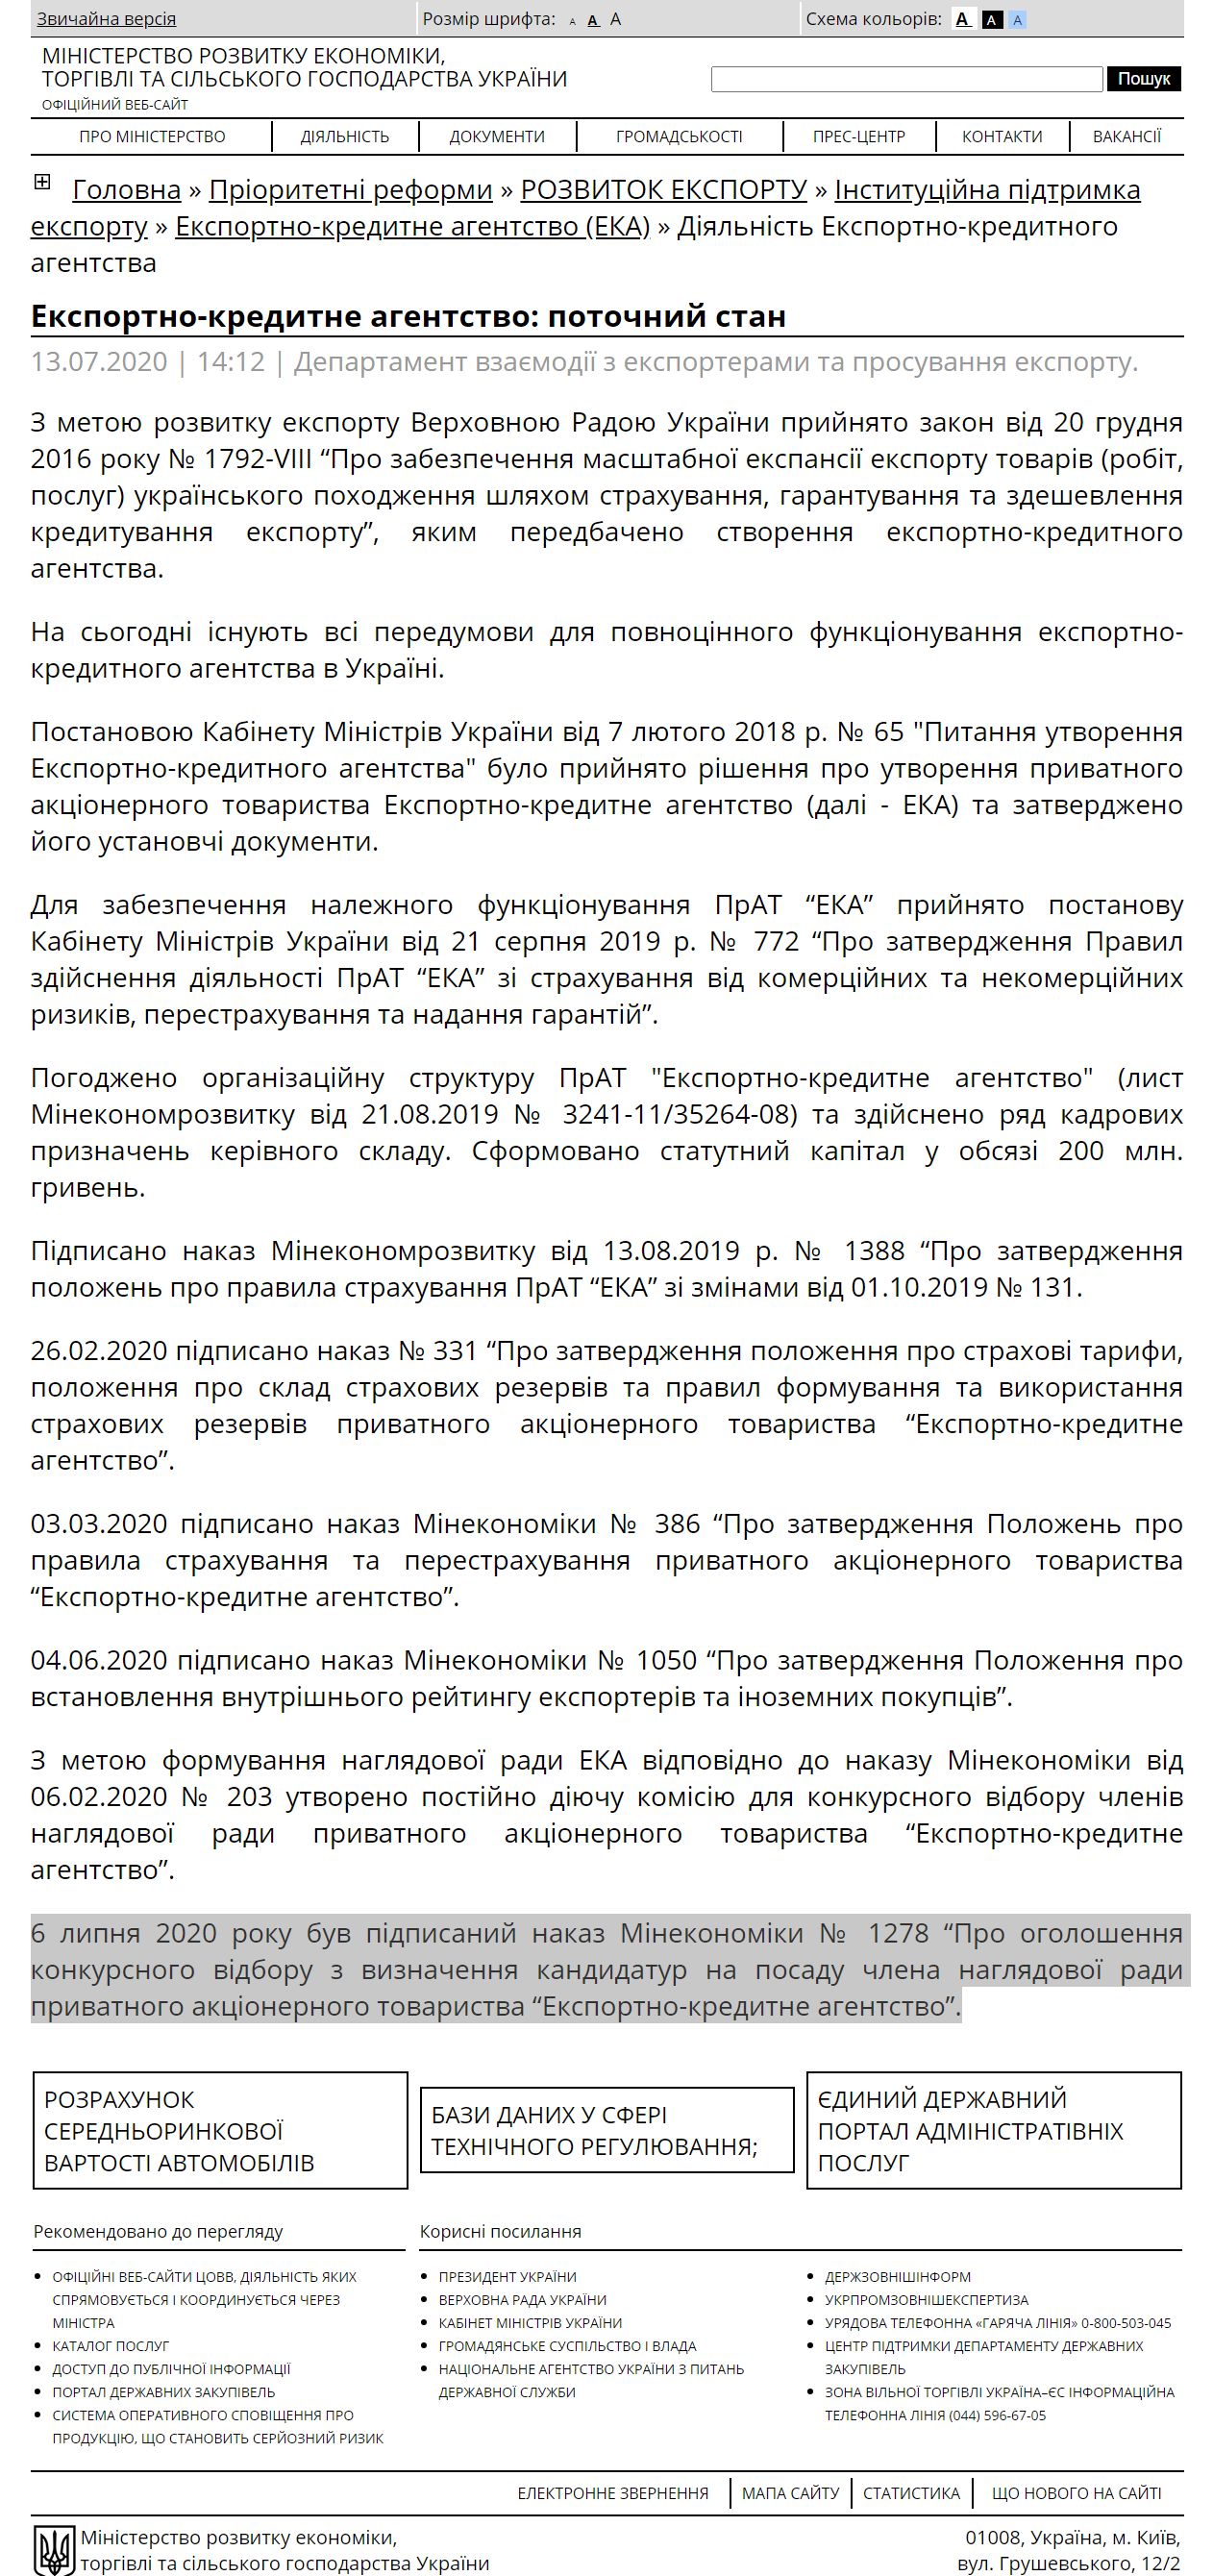 https://www.me.gov.ua/Documents/Detail?lang=uk-UA&id=2bc9cad0-7dcc-4e80-b3d4-824f92b9a720&title=EksportnokreditneAgentstvo-PotochniiStan&isSpecial=true